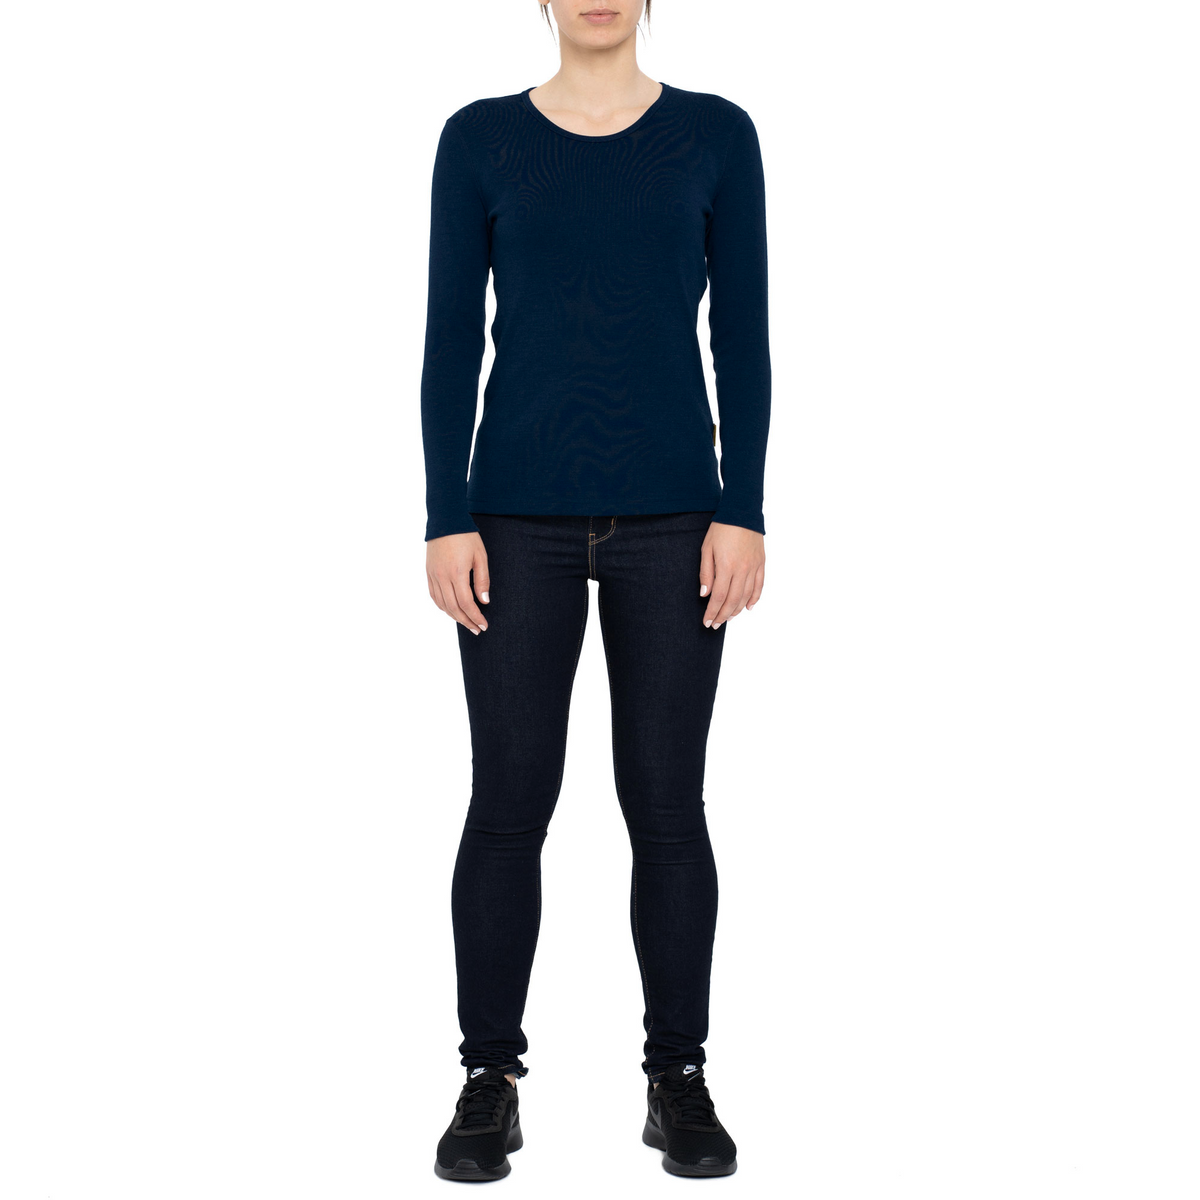 MENIQUE Long Sleeve Crew 100% Merino Wool Womens Shirt Dark Blue